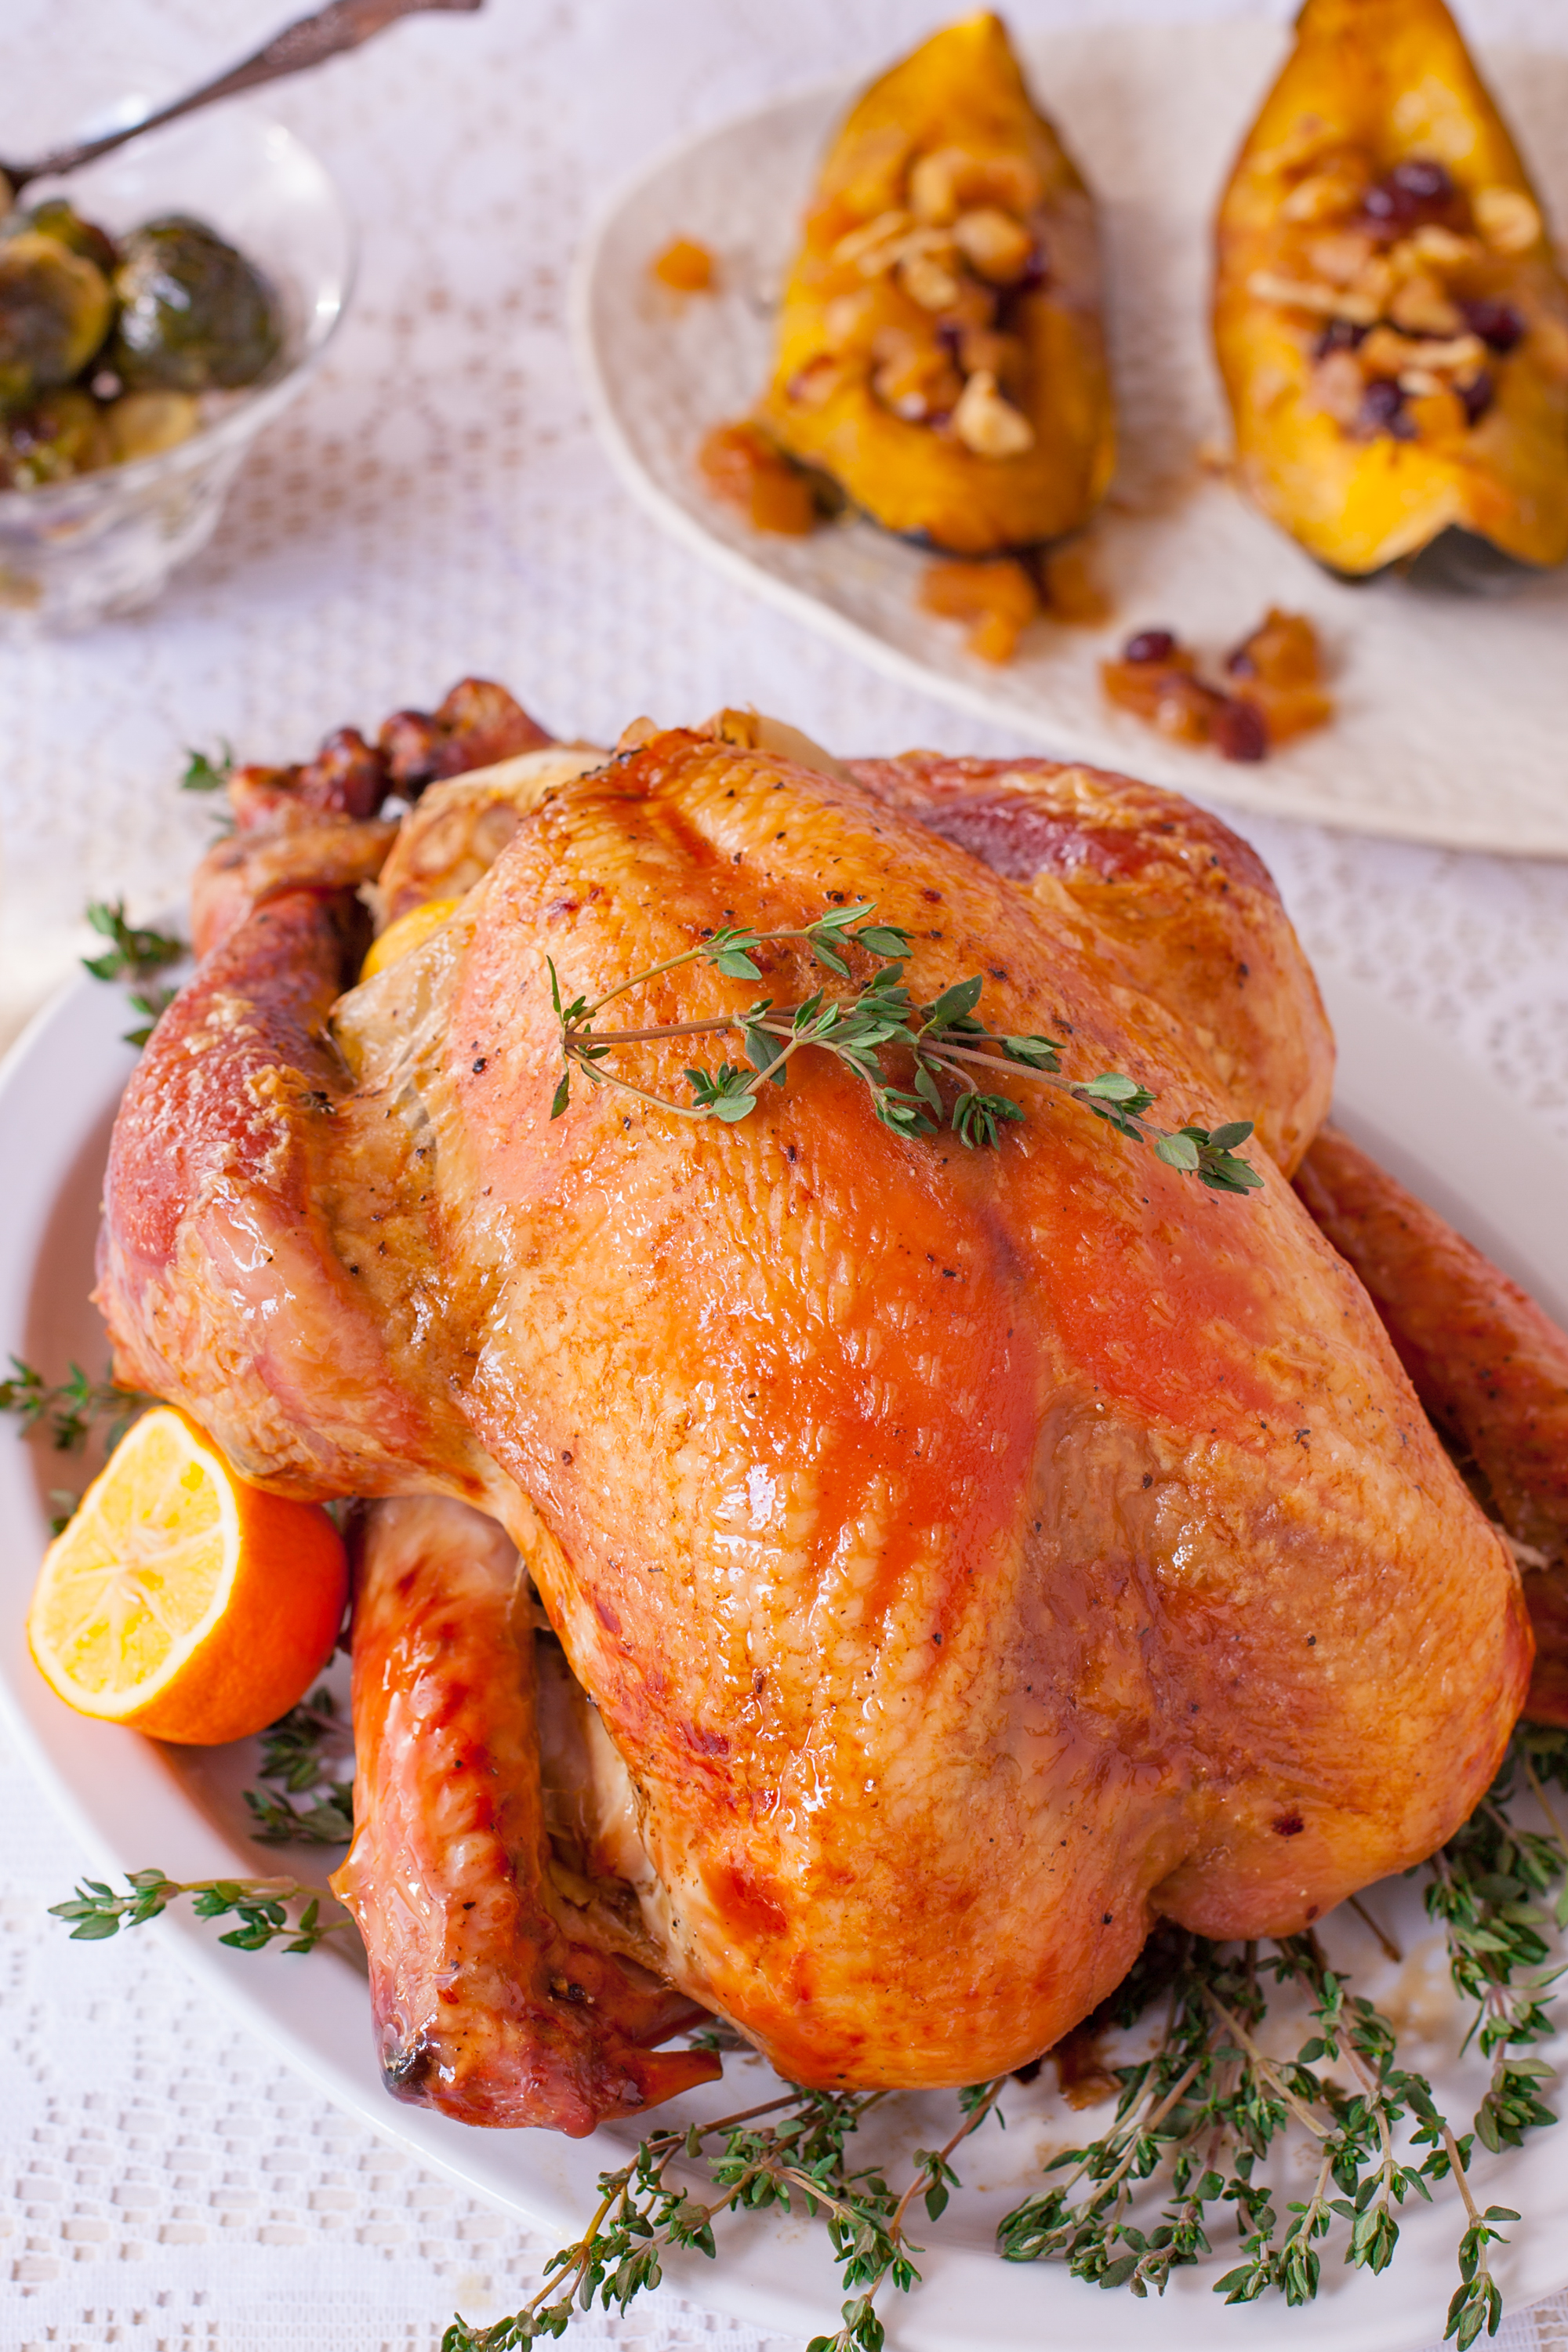 https://eatingrichly.com/wp-content/uploads/2010/11/perfect-roast-turkey-2109.jpg